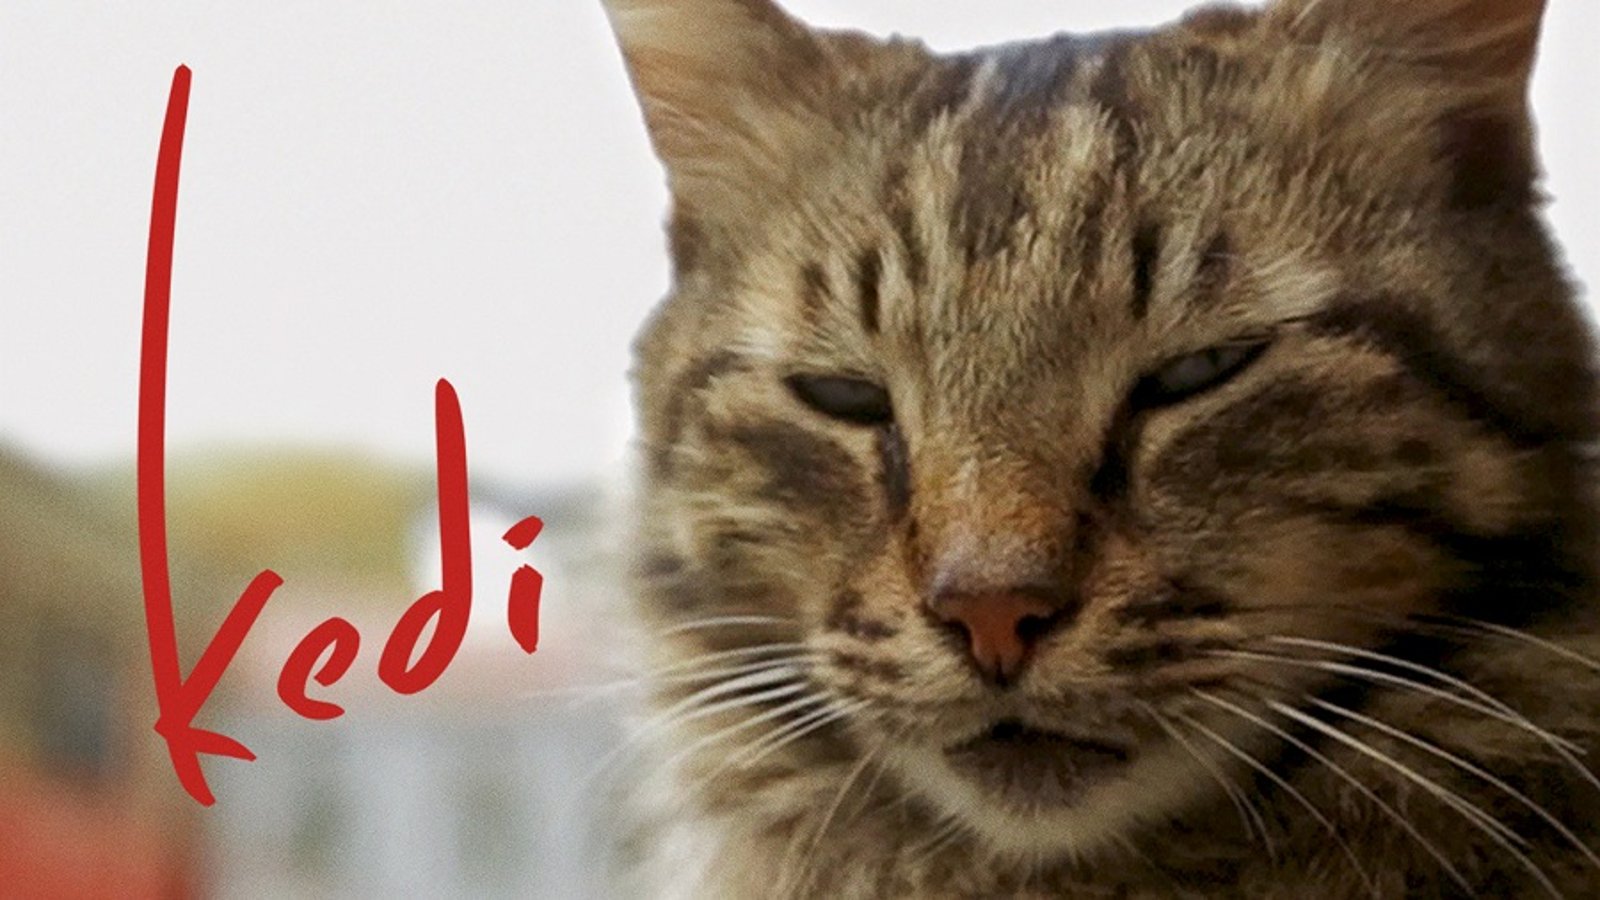 Kedi - The Cats of an Ancient City